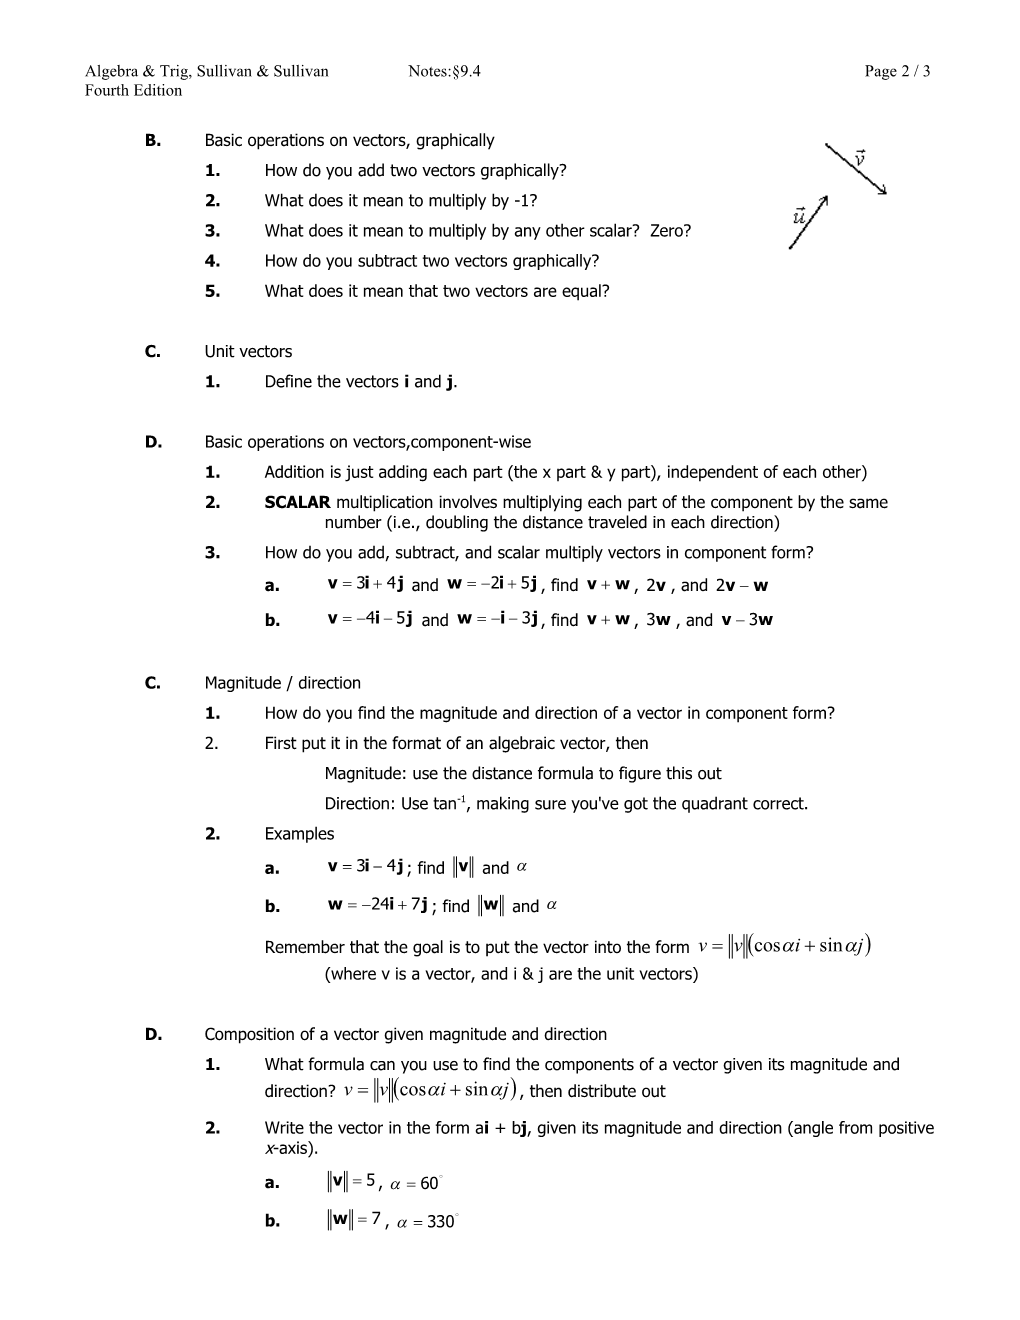 Algebra & Trig, Sullivan & Sullivannotes: 9.4Page 1 / 3 Fourth Edition